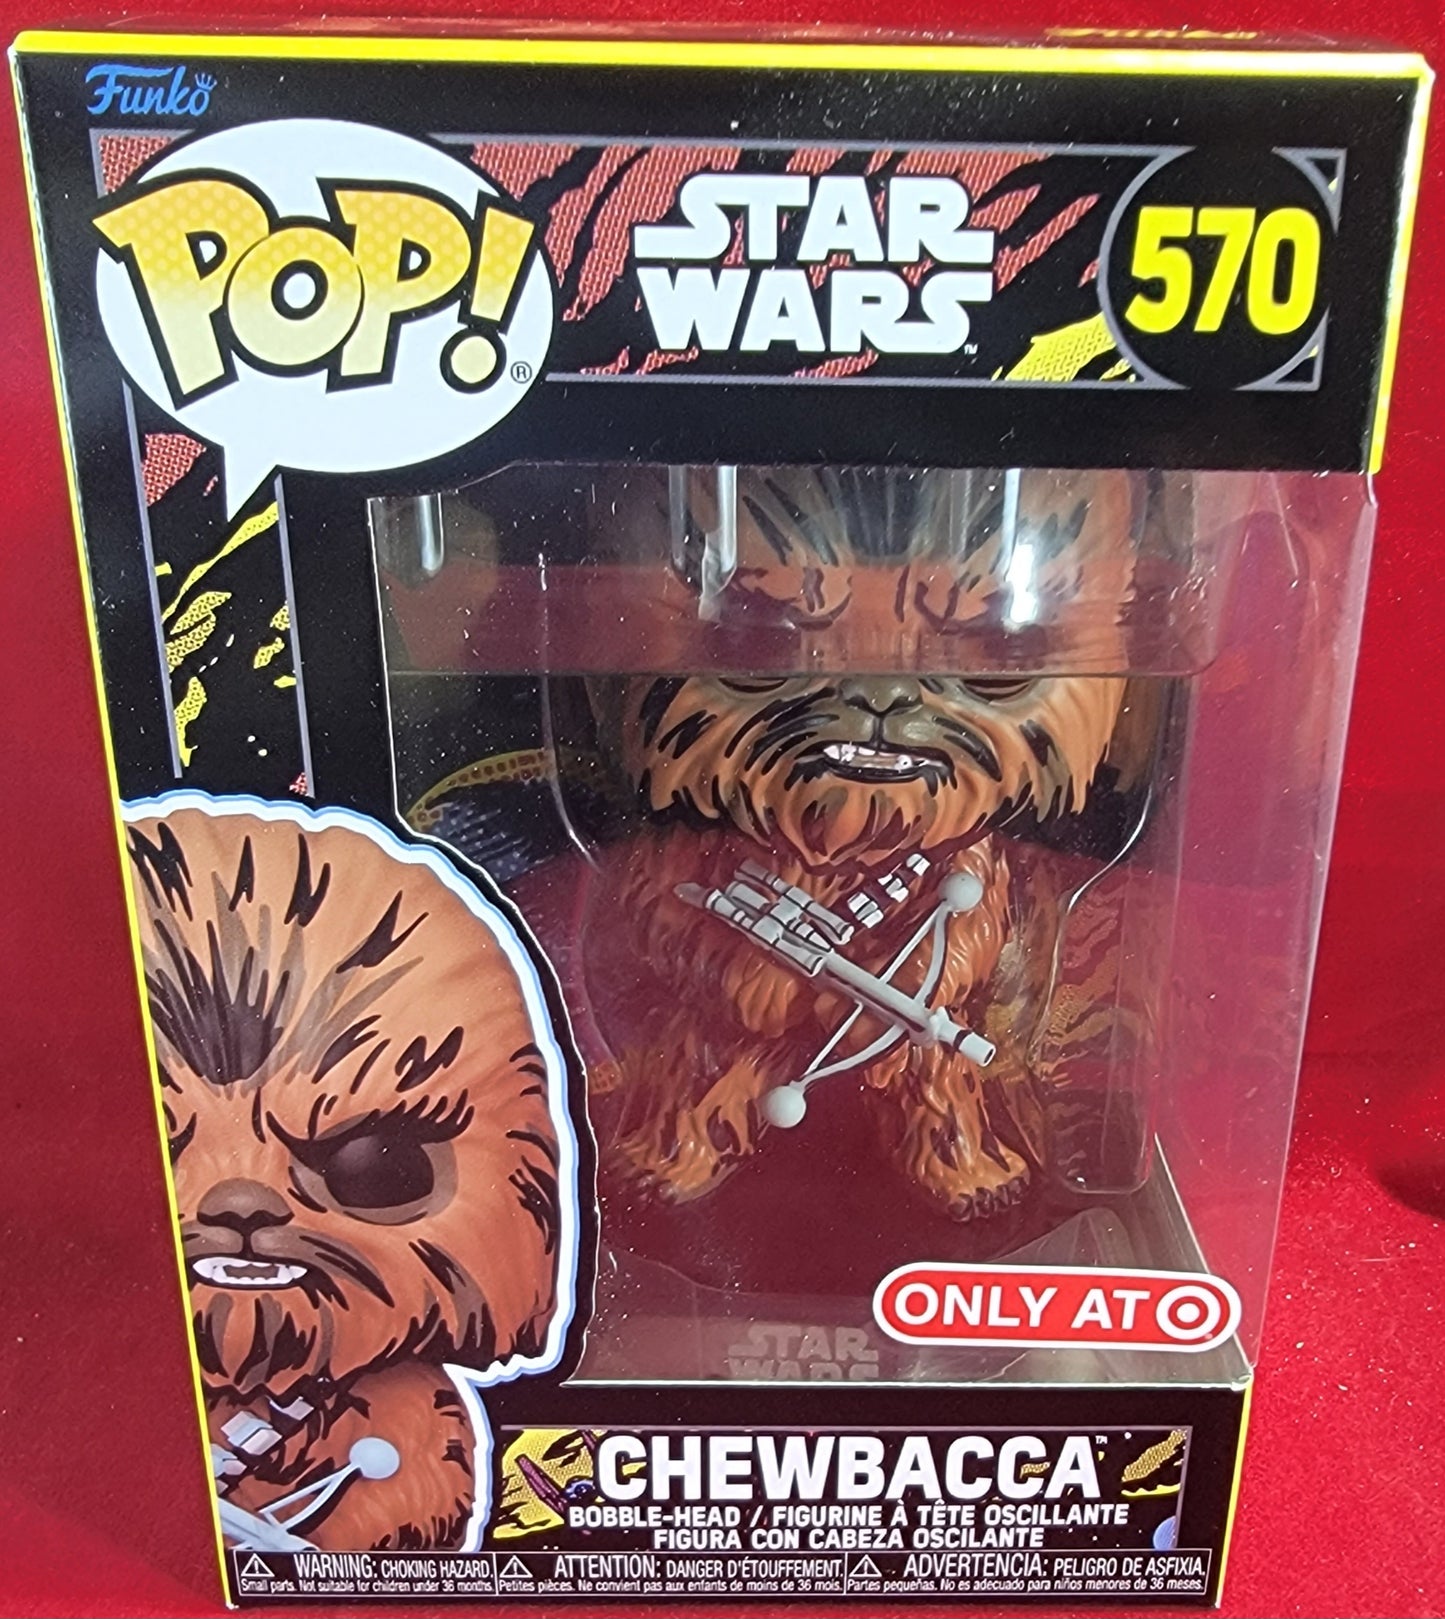 Chewbacca target exclusive funko # 570 (nib)